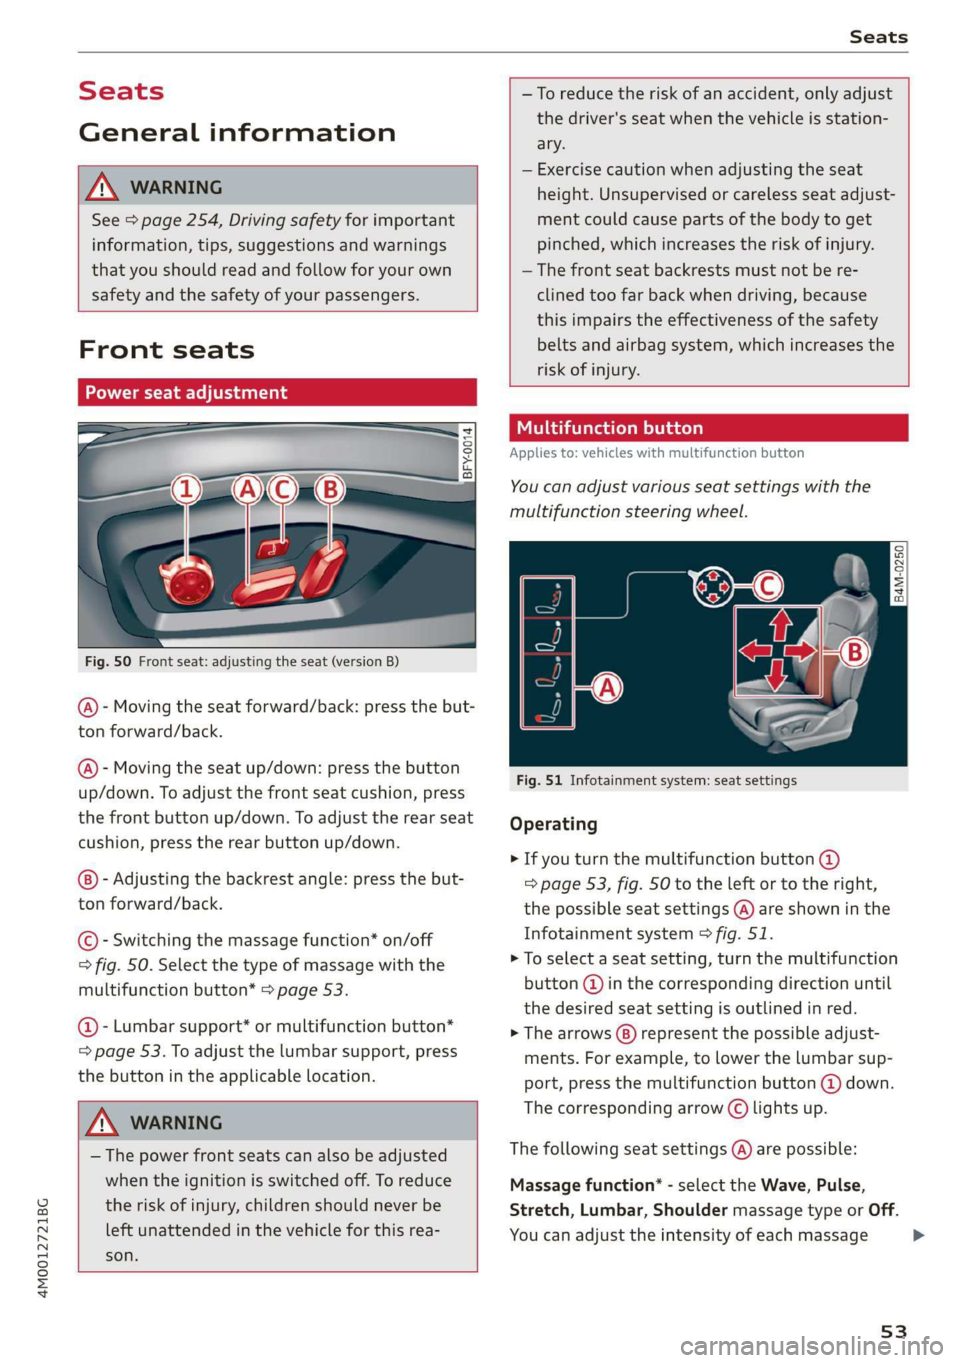 AUDI Q7 2019  Owner´s Manual 4M0012721BG
Seats
 
Seats
Generalinformation
 
ZAWARNING
See>page254,Drivingsafetyforimportant
information,tips,suggestionsandwarnings
thatyoushouldreadandfollowforyourown
safetyandthesafetyofyourpass